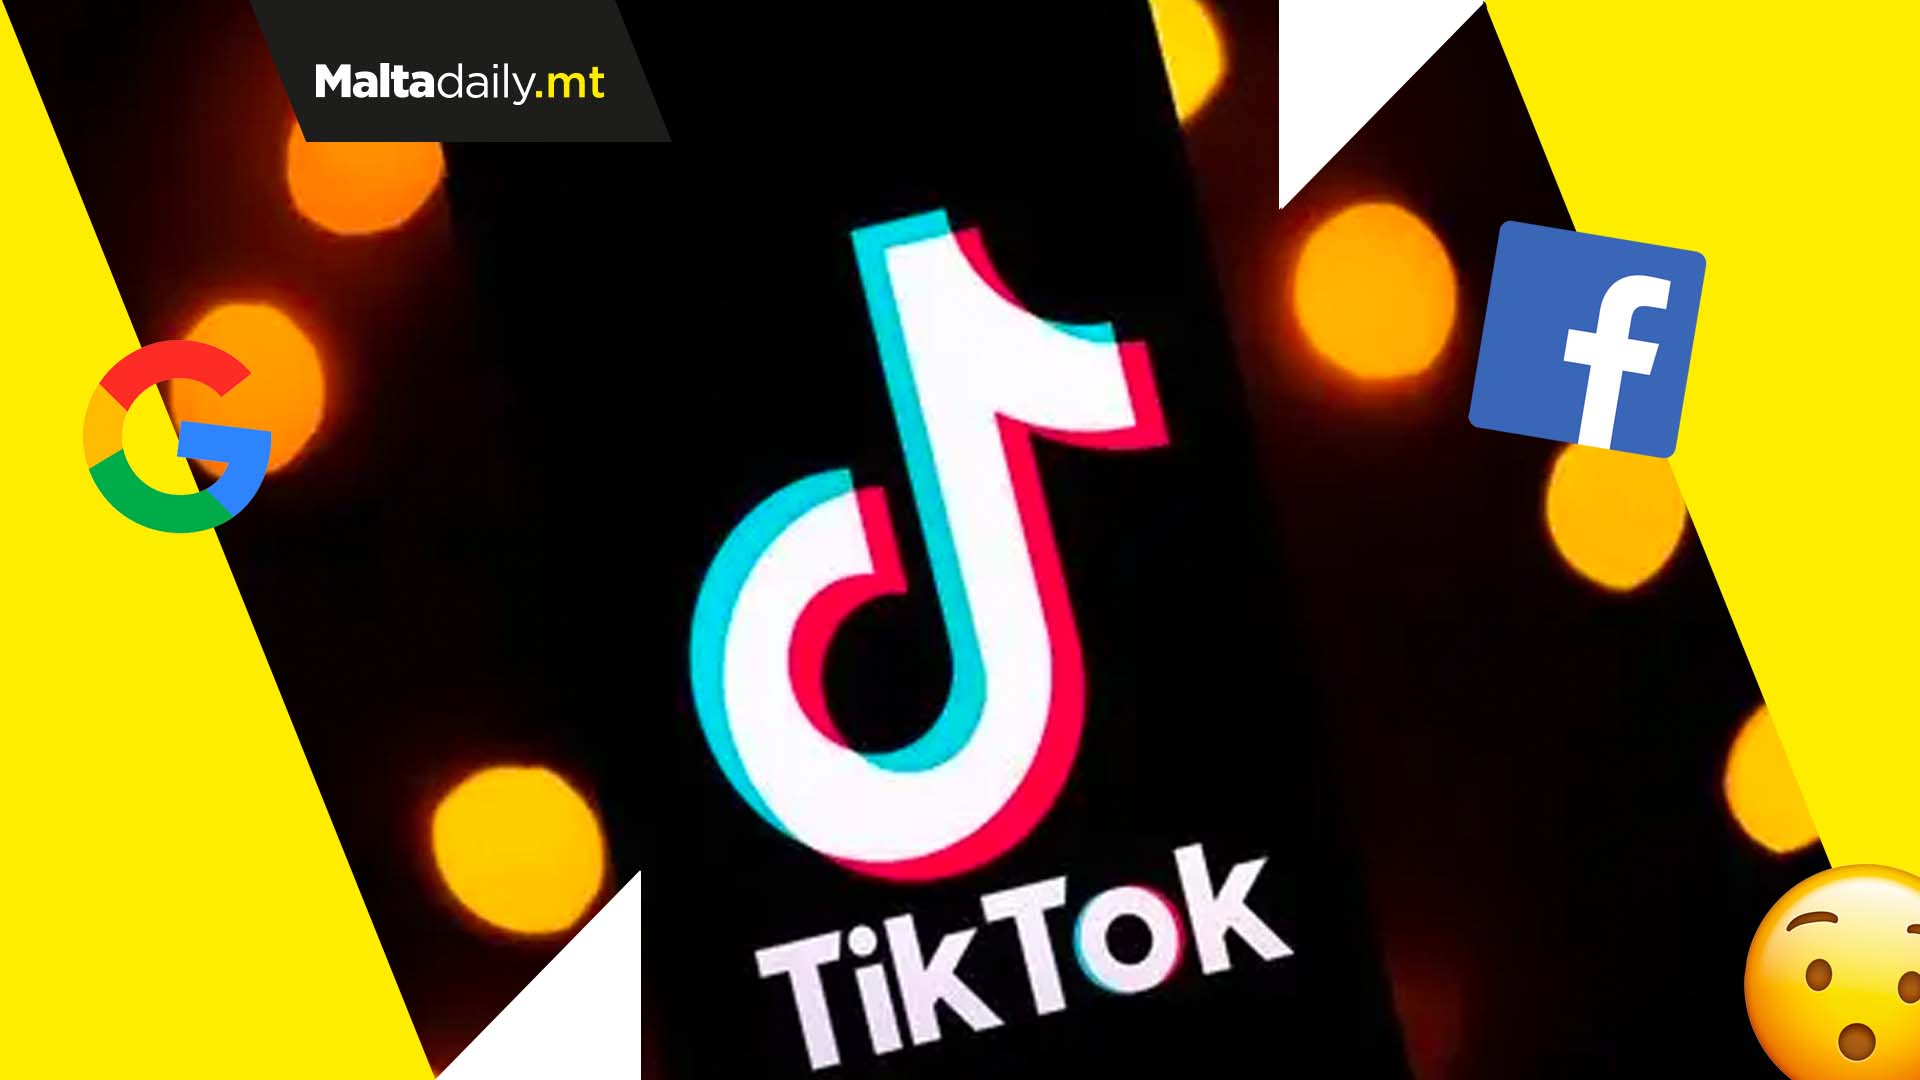 TikTok beats Google as most visited internet website